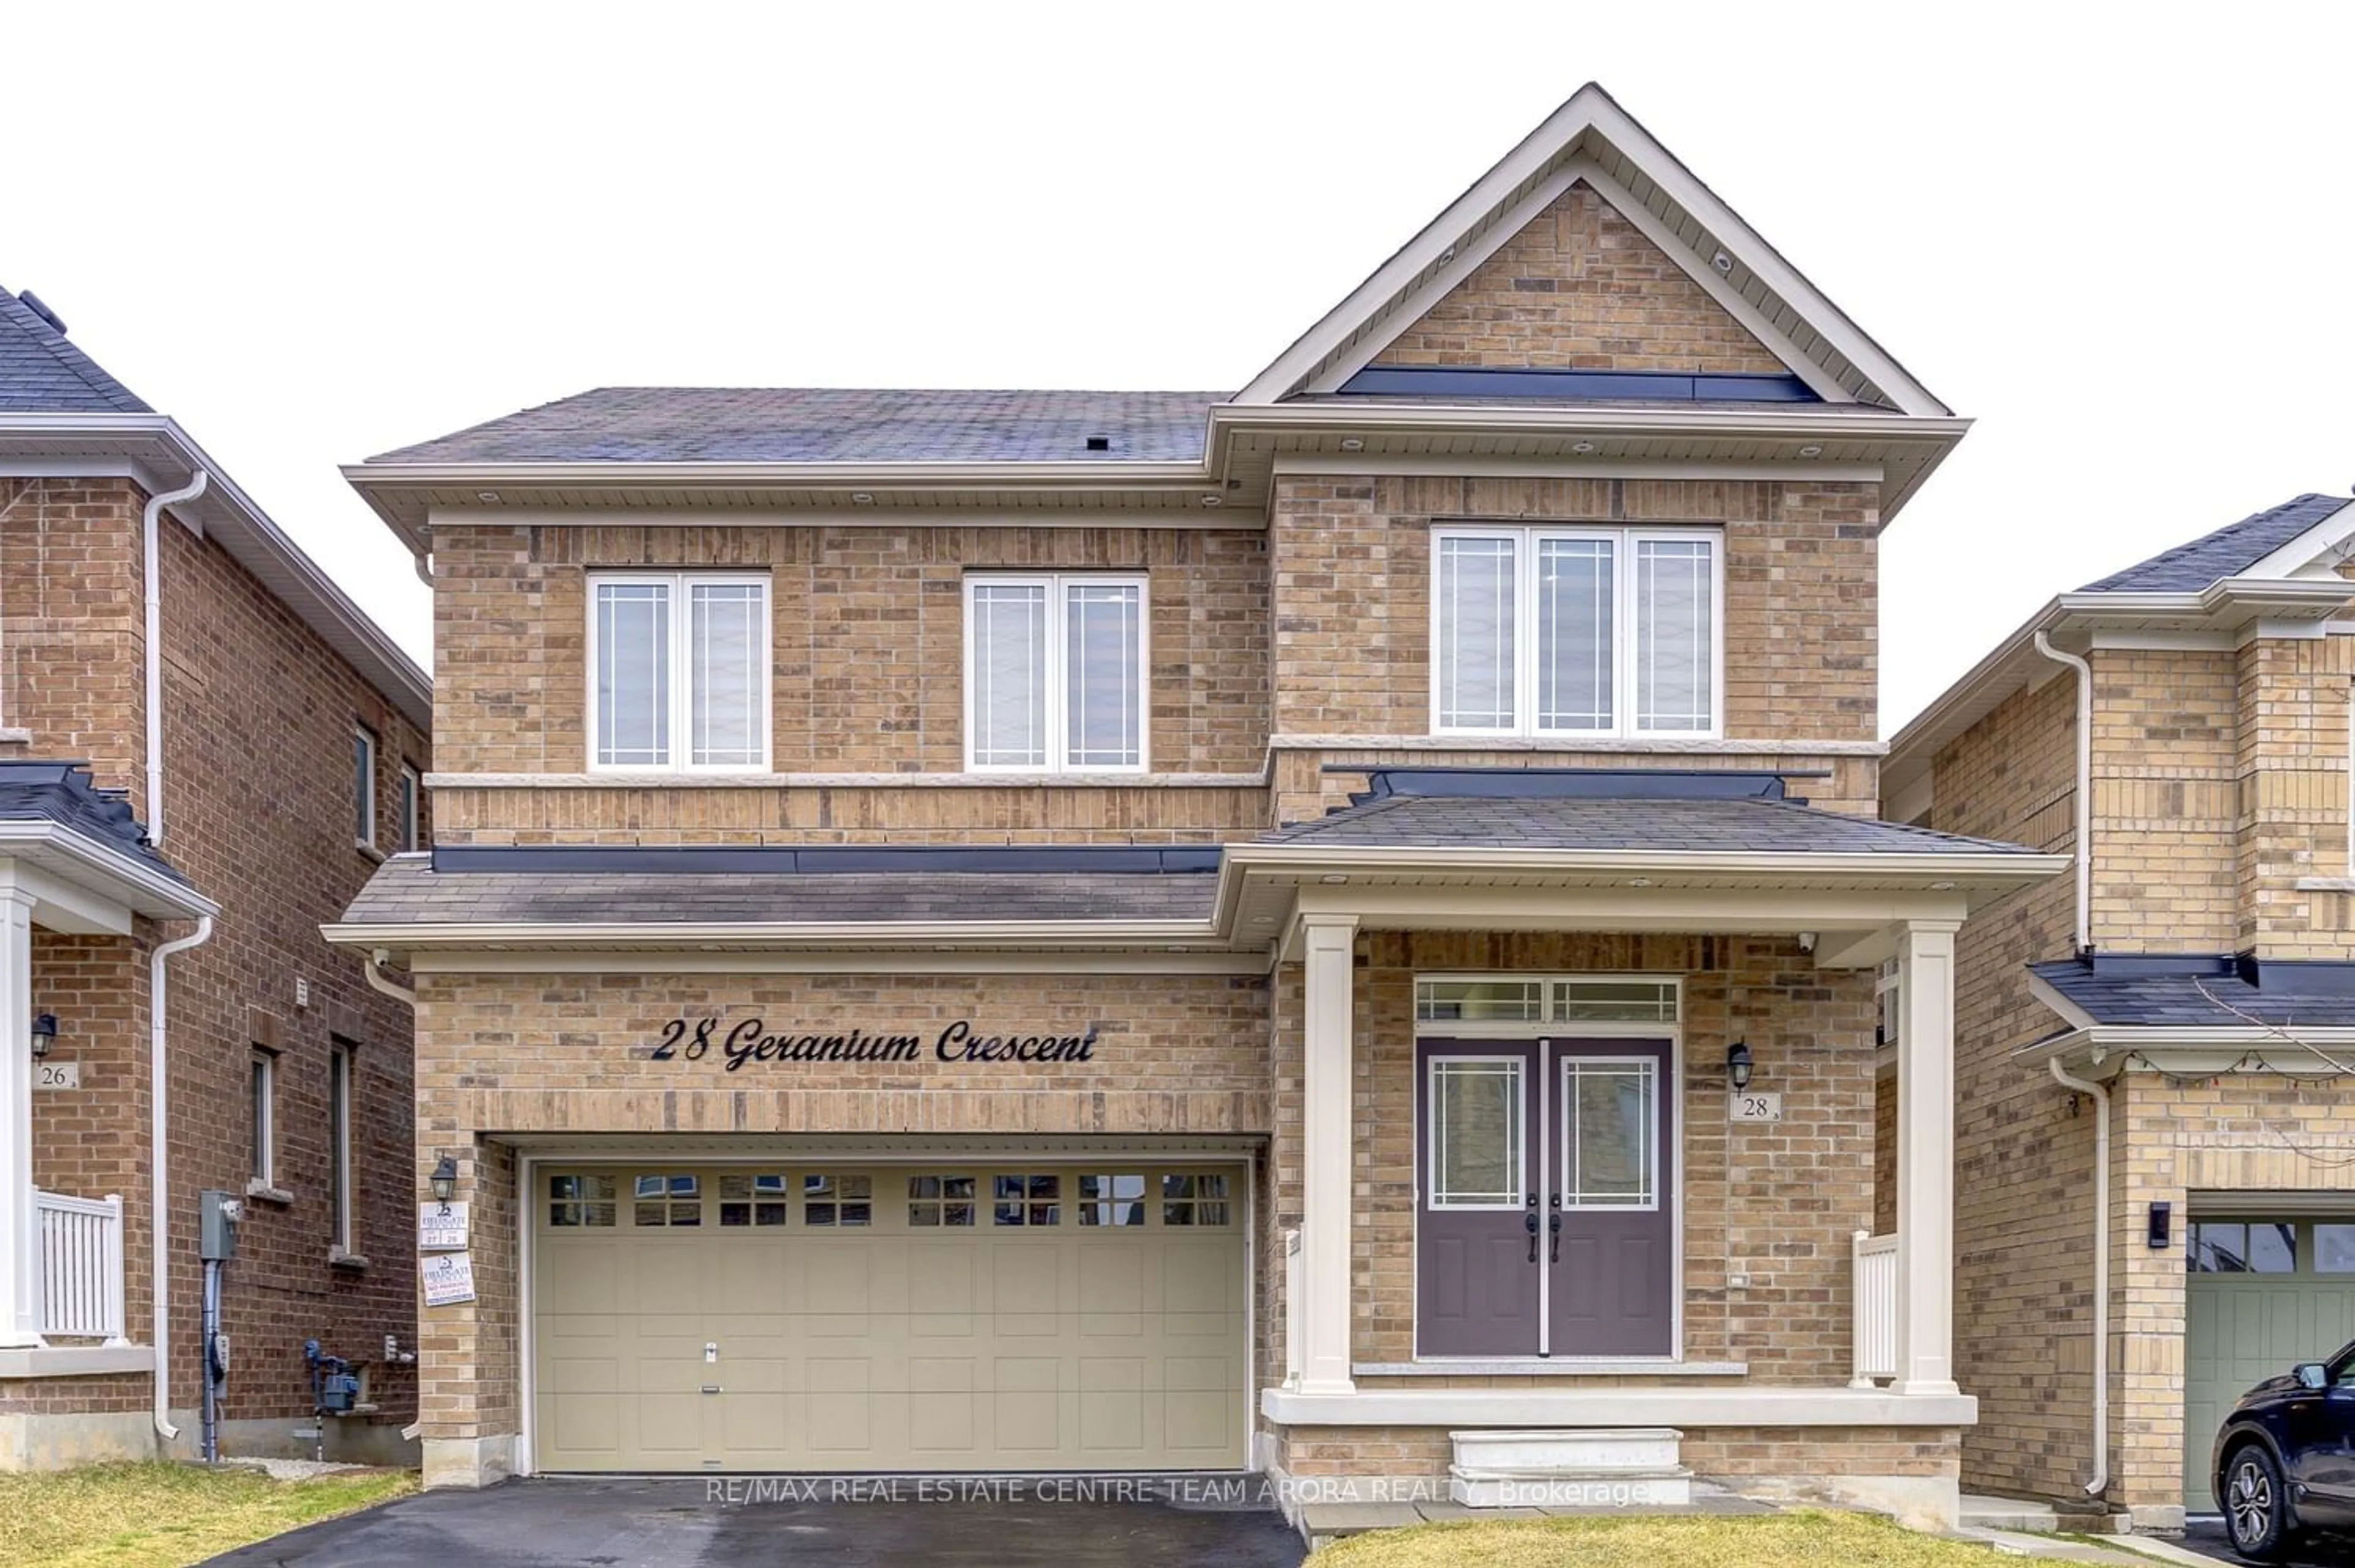 Home with brick exterior material for 28 Geranium Cres, Brampton Ontario L6Y 1N8